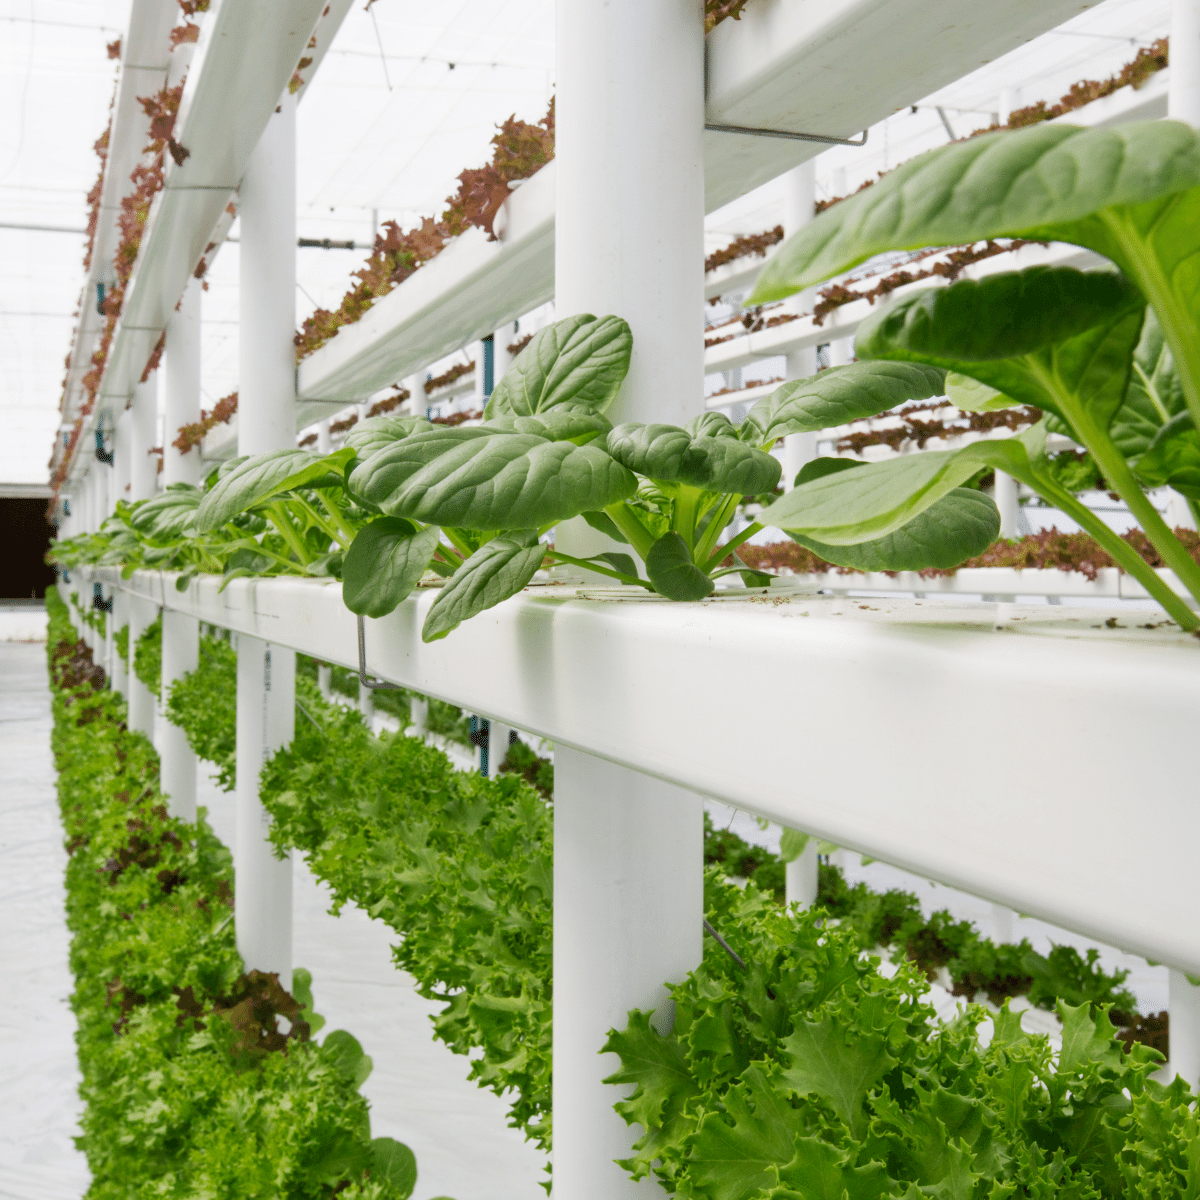 Vertical farmed salad greens